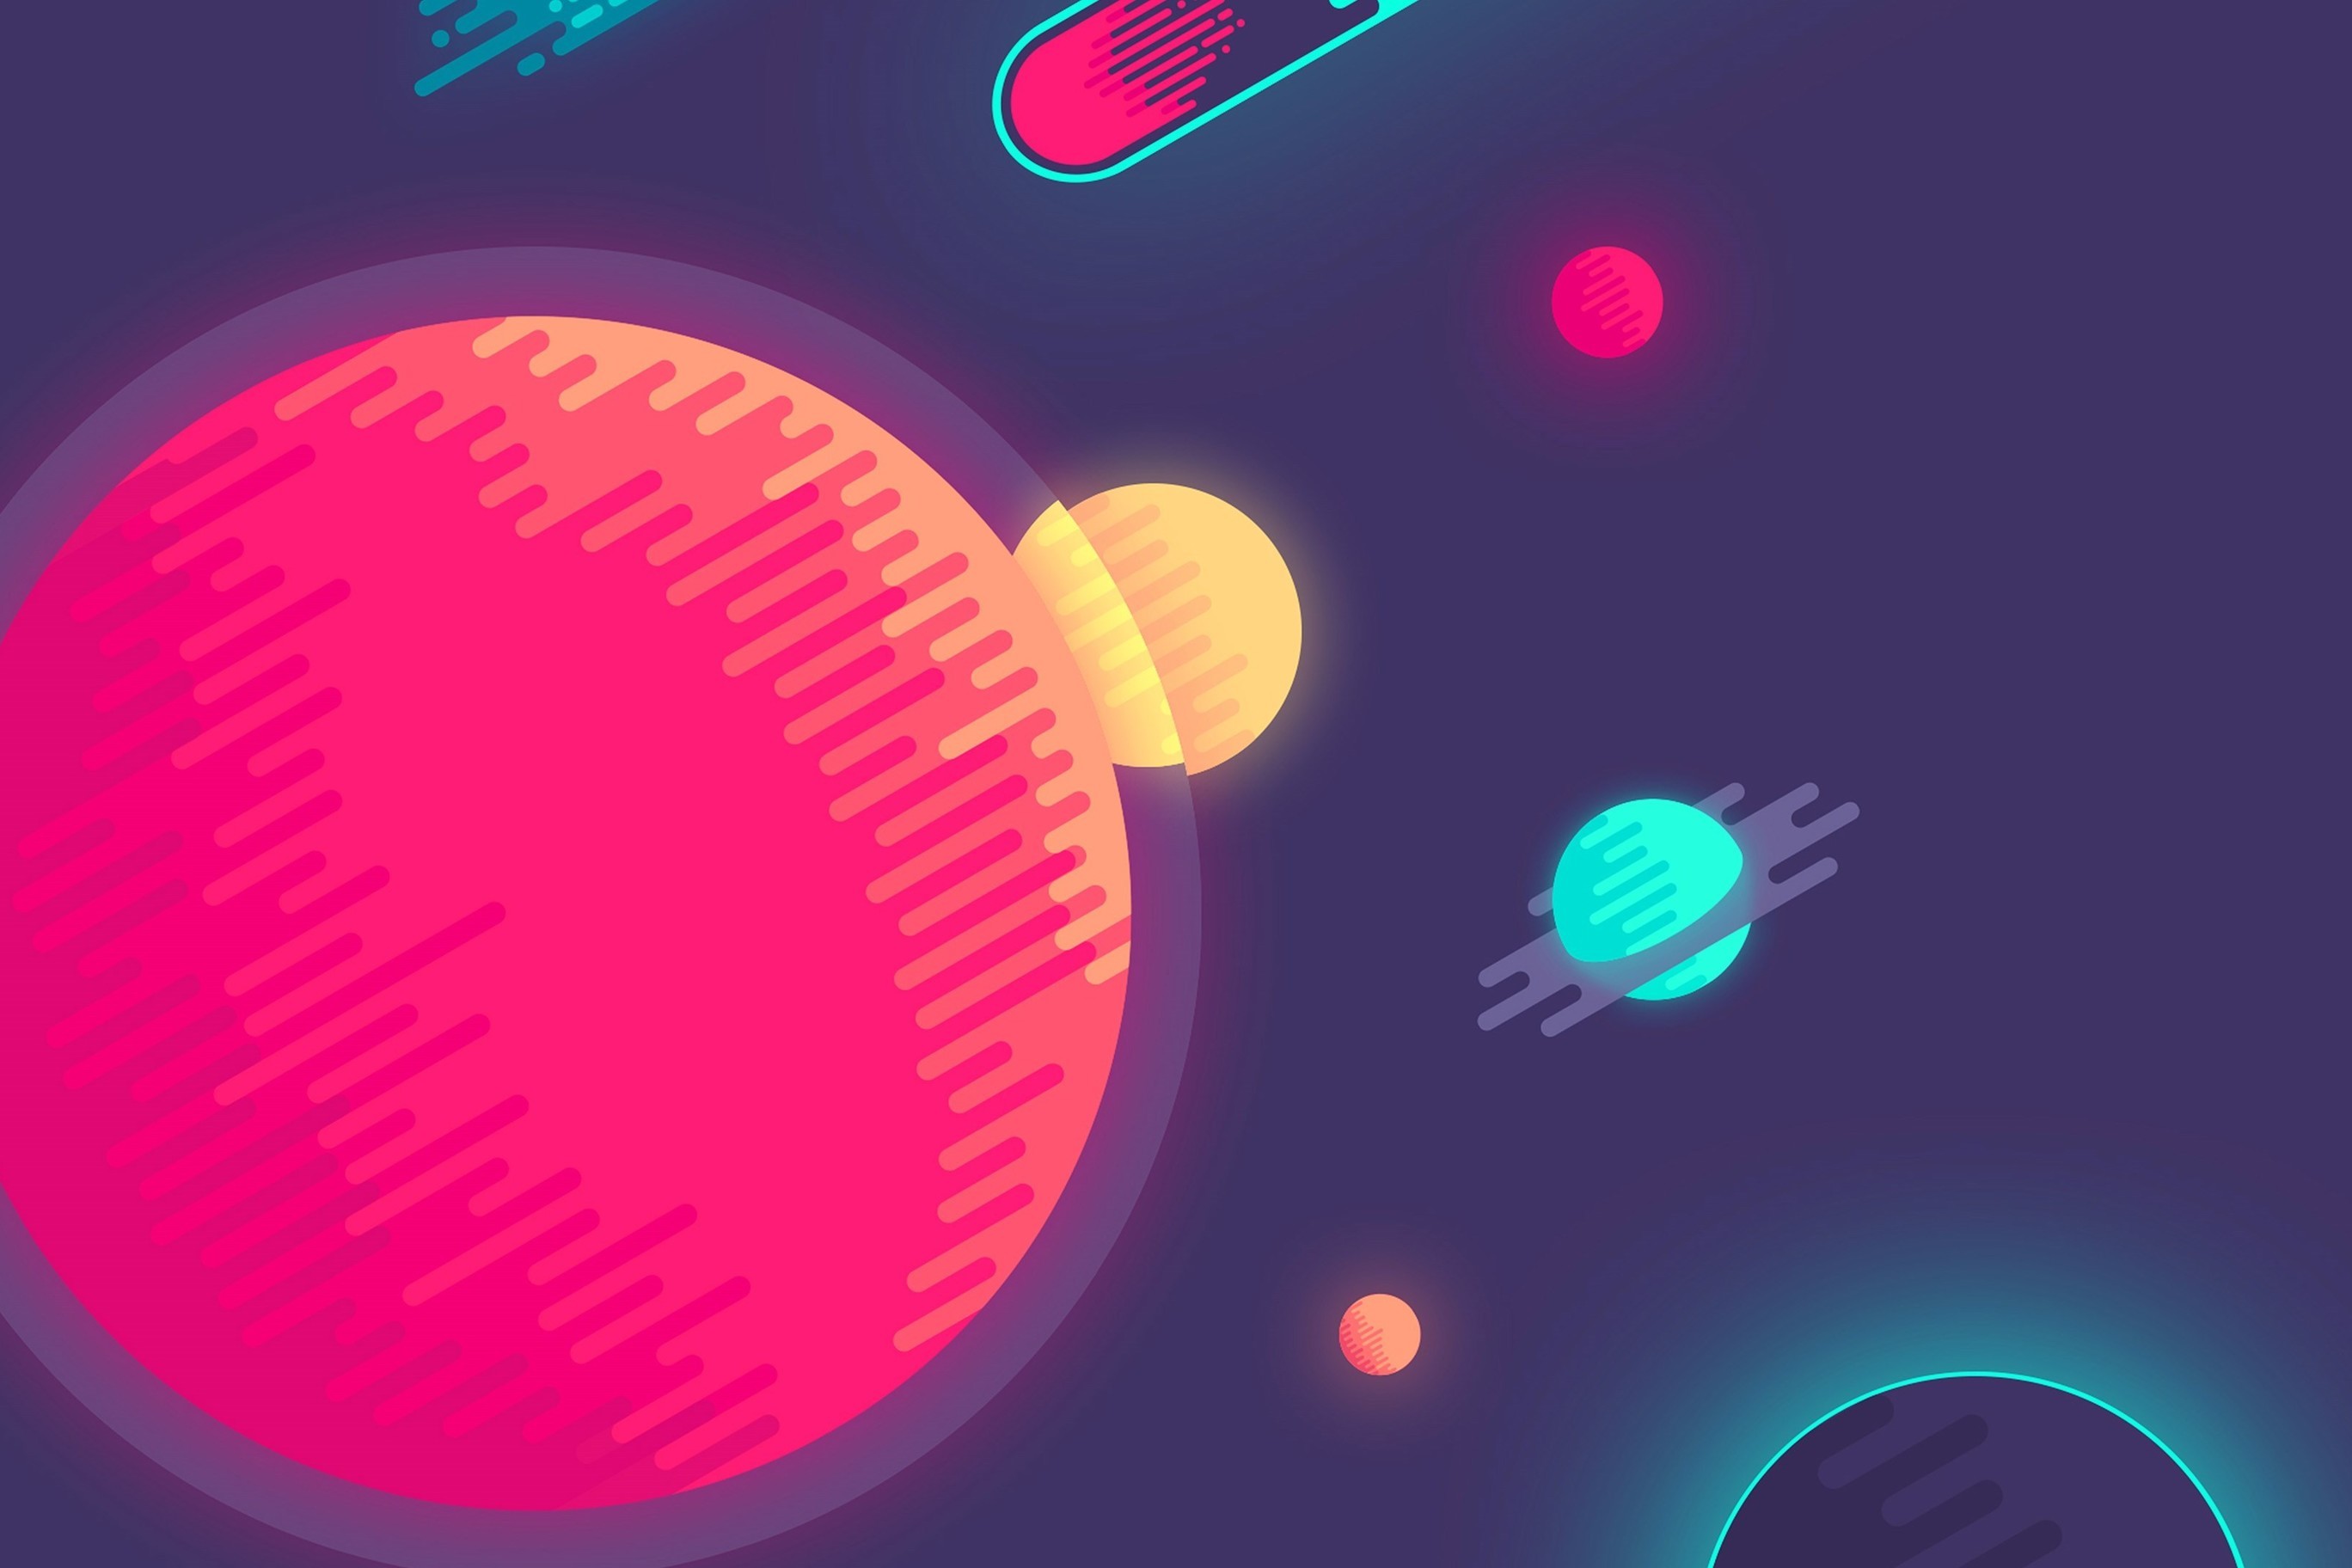 Wallpaper - Cartoon Space Desktop Backgrounds - 2736x1824 Wallpaper